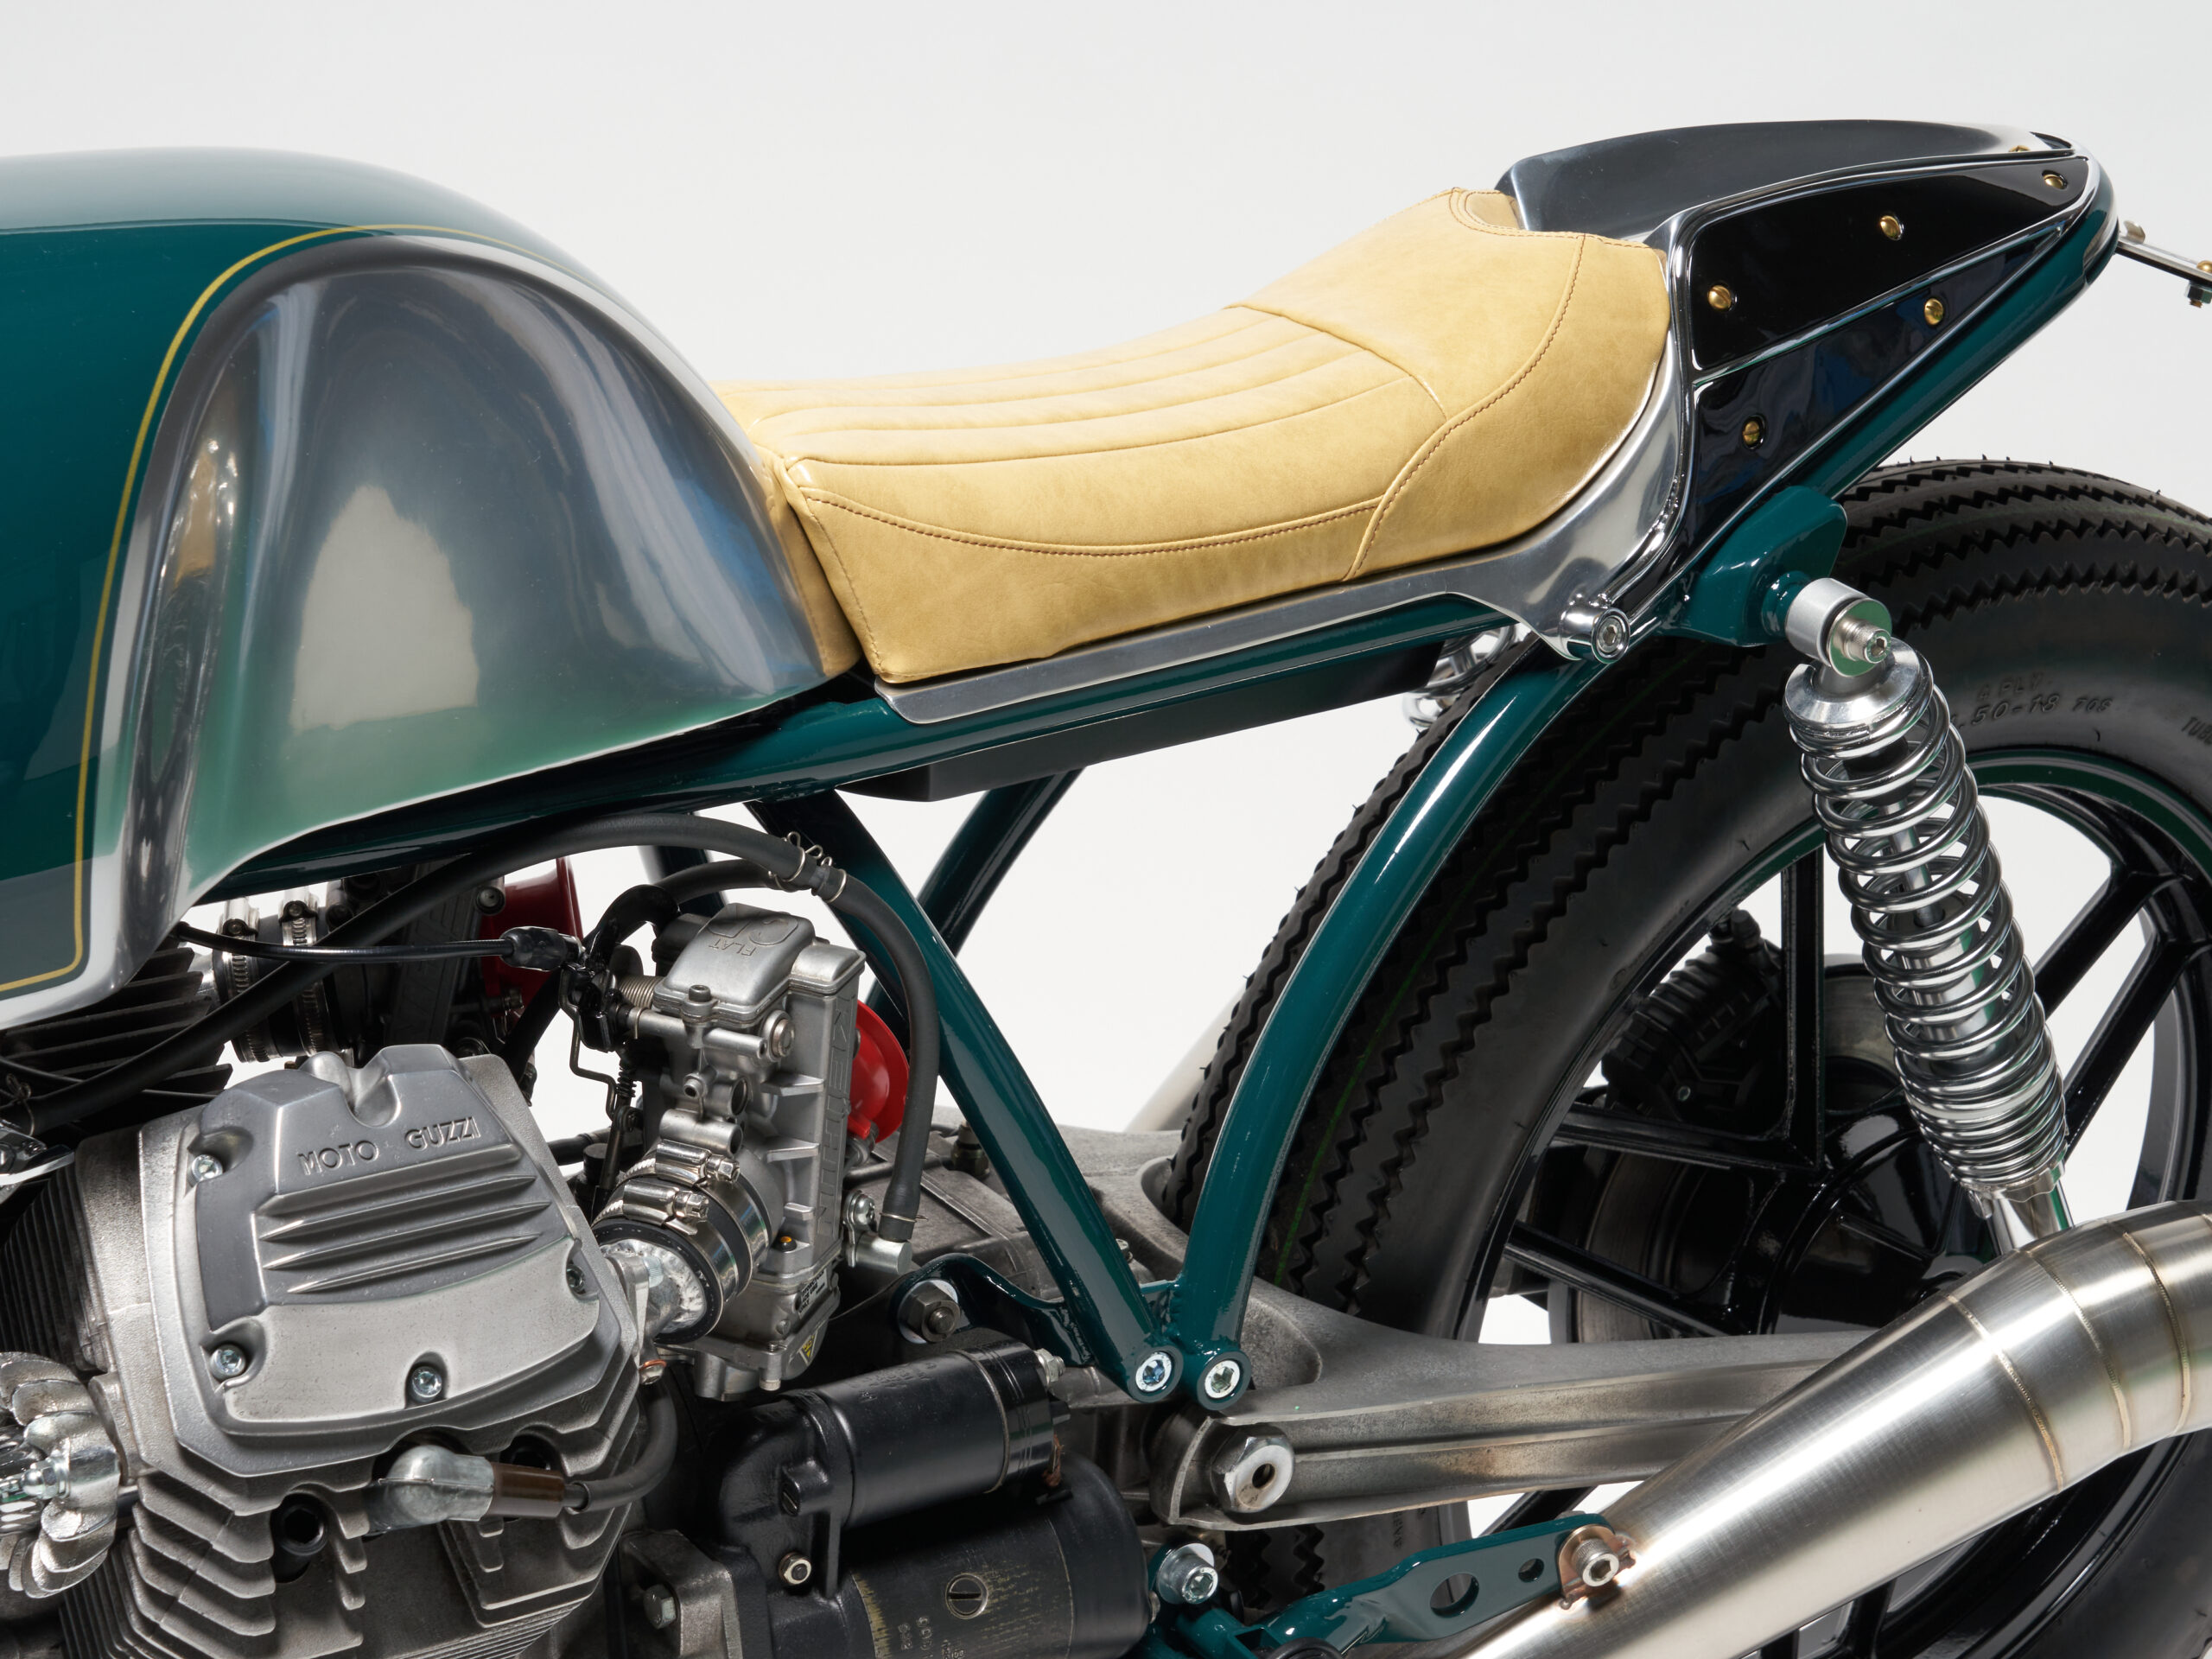 Moto Guzzi "Beretta" Cafe Racer by Dues Japan